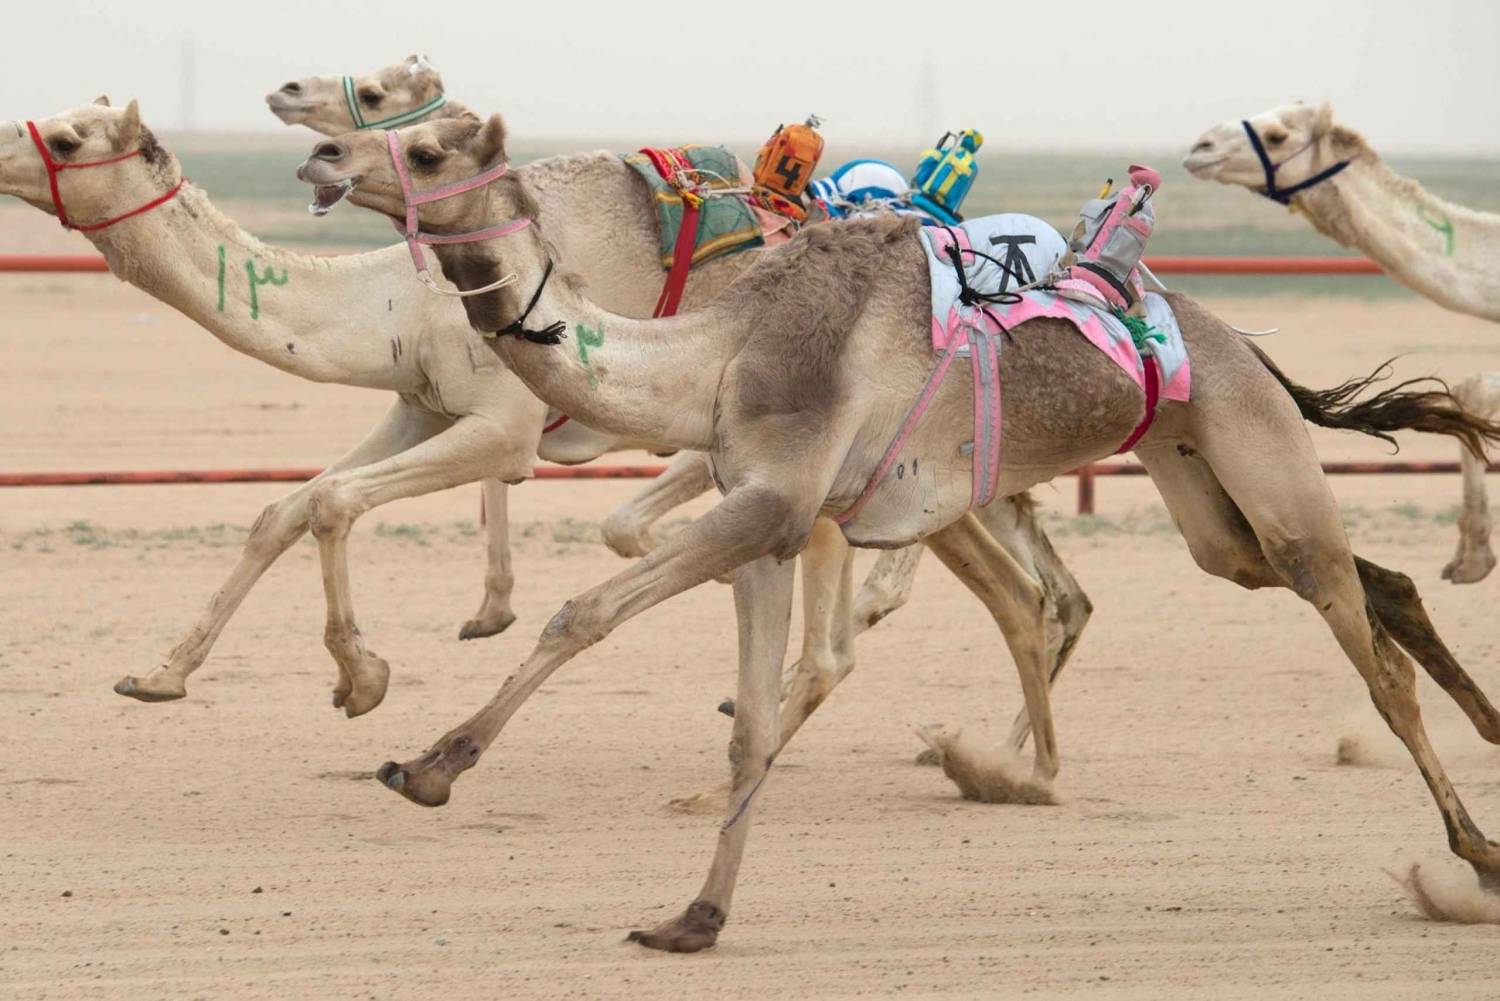 Carrera Real de Camellos de Dubai con asientos preferentes y corto paseo en camello